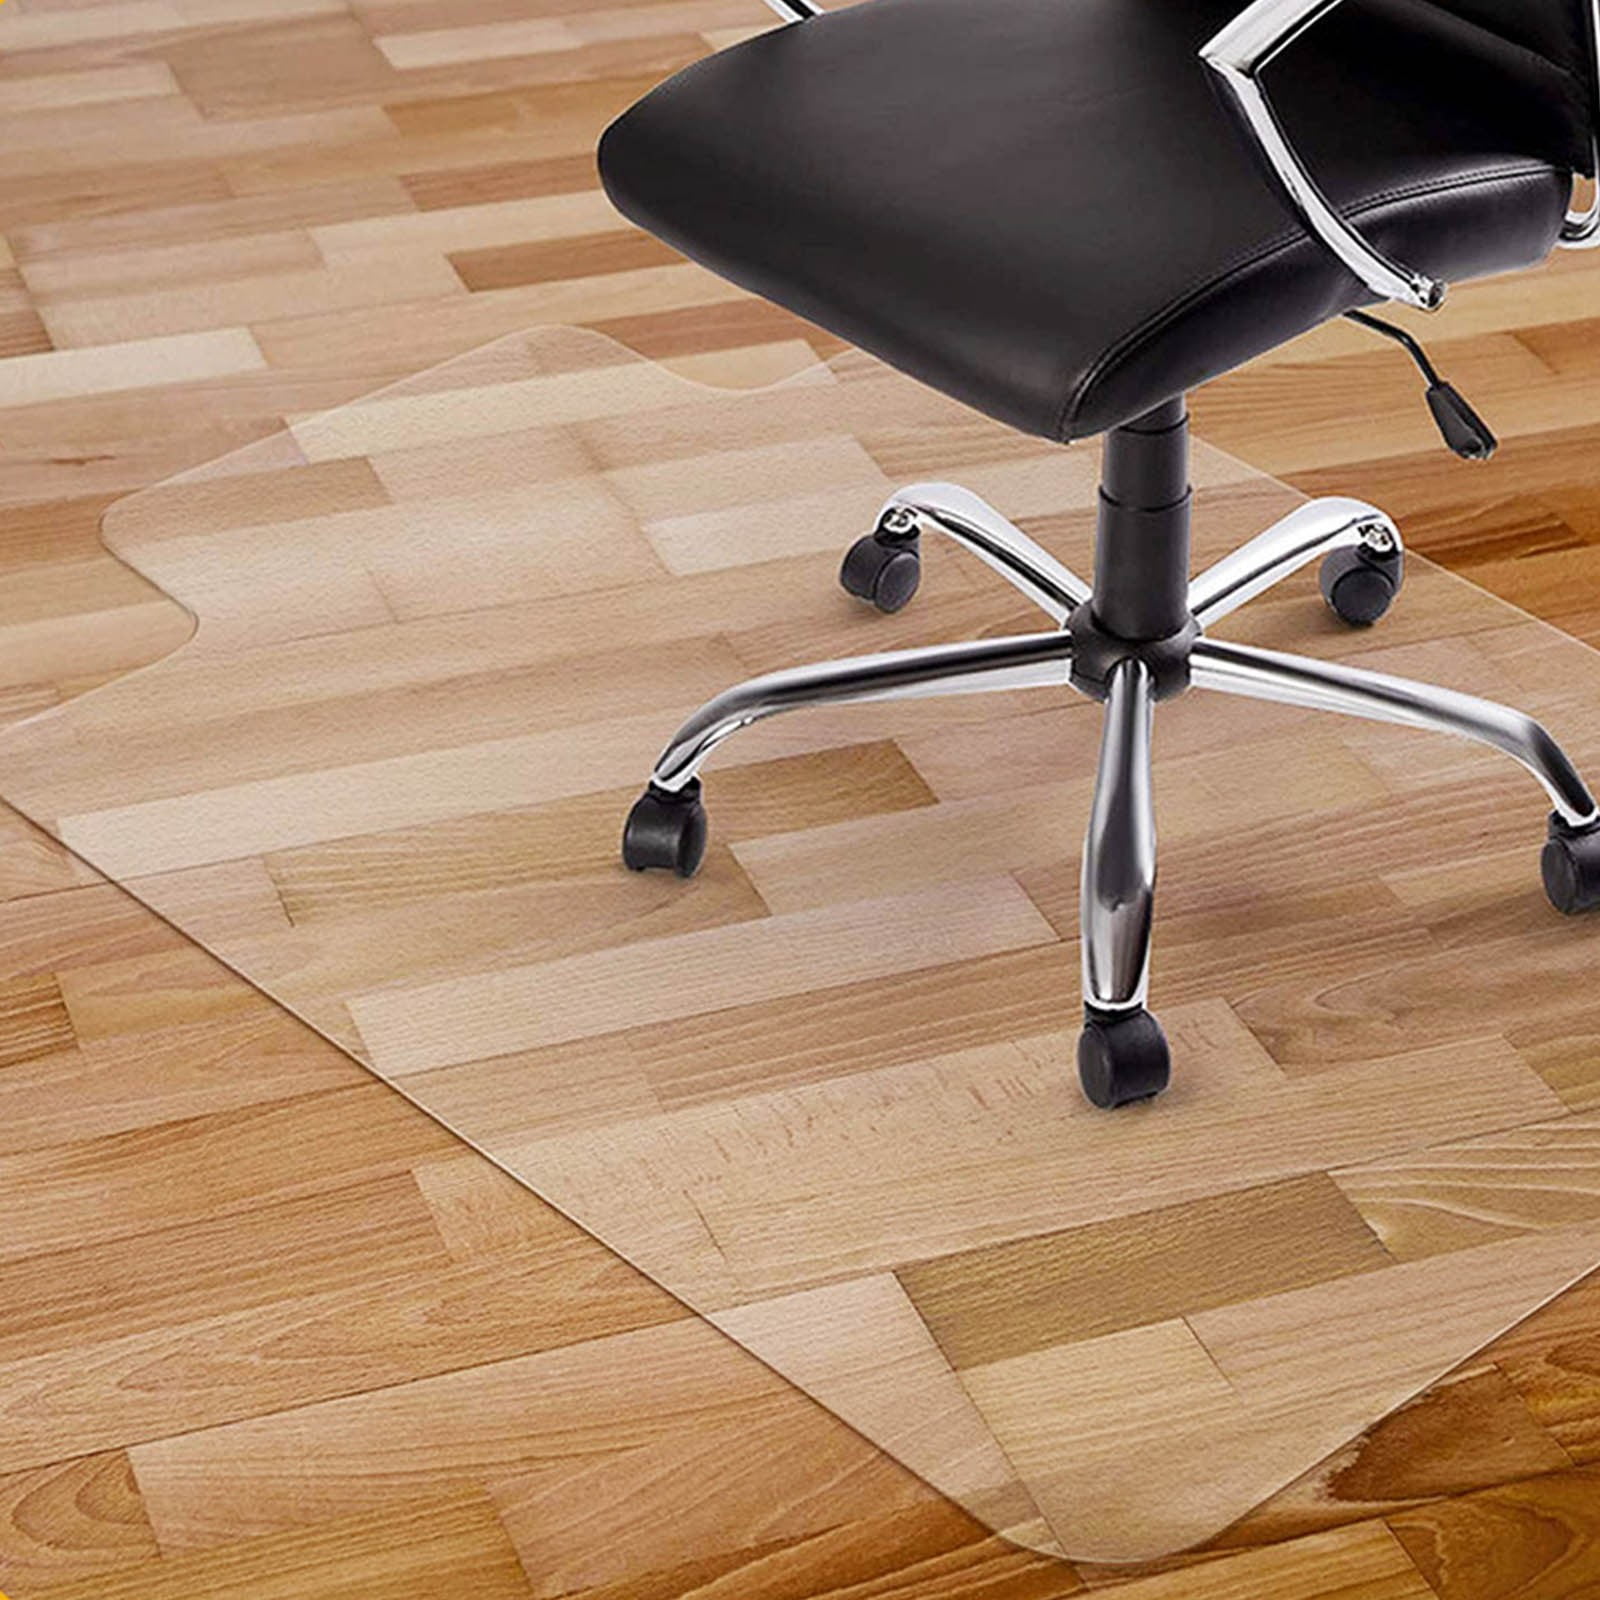 Non-slip mat PVC floor mat thickened plastic carpet covered